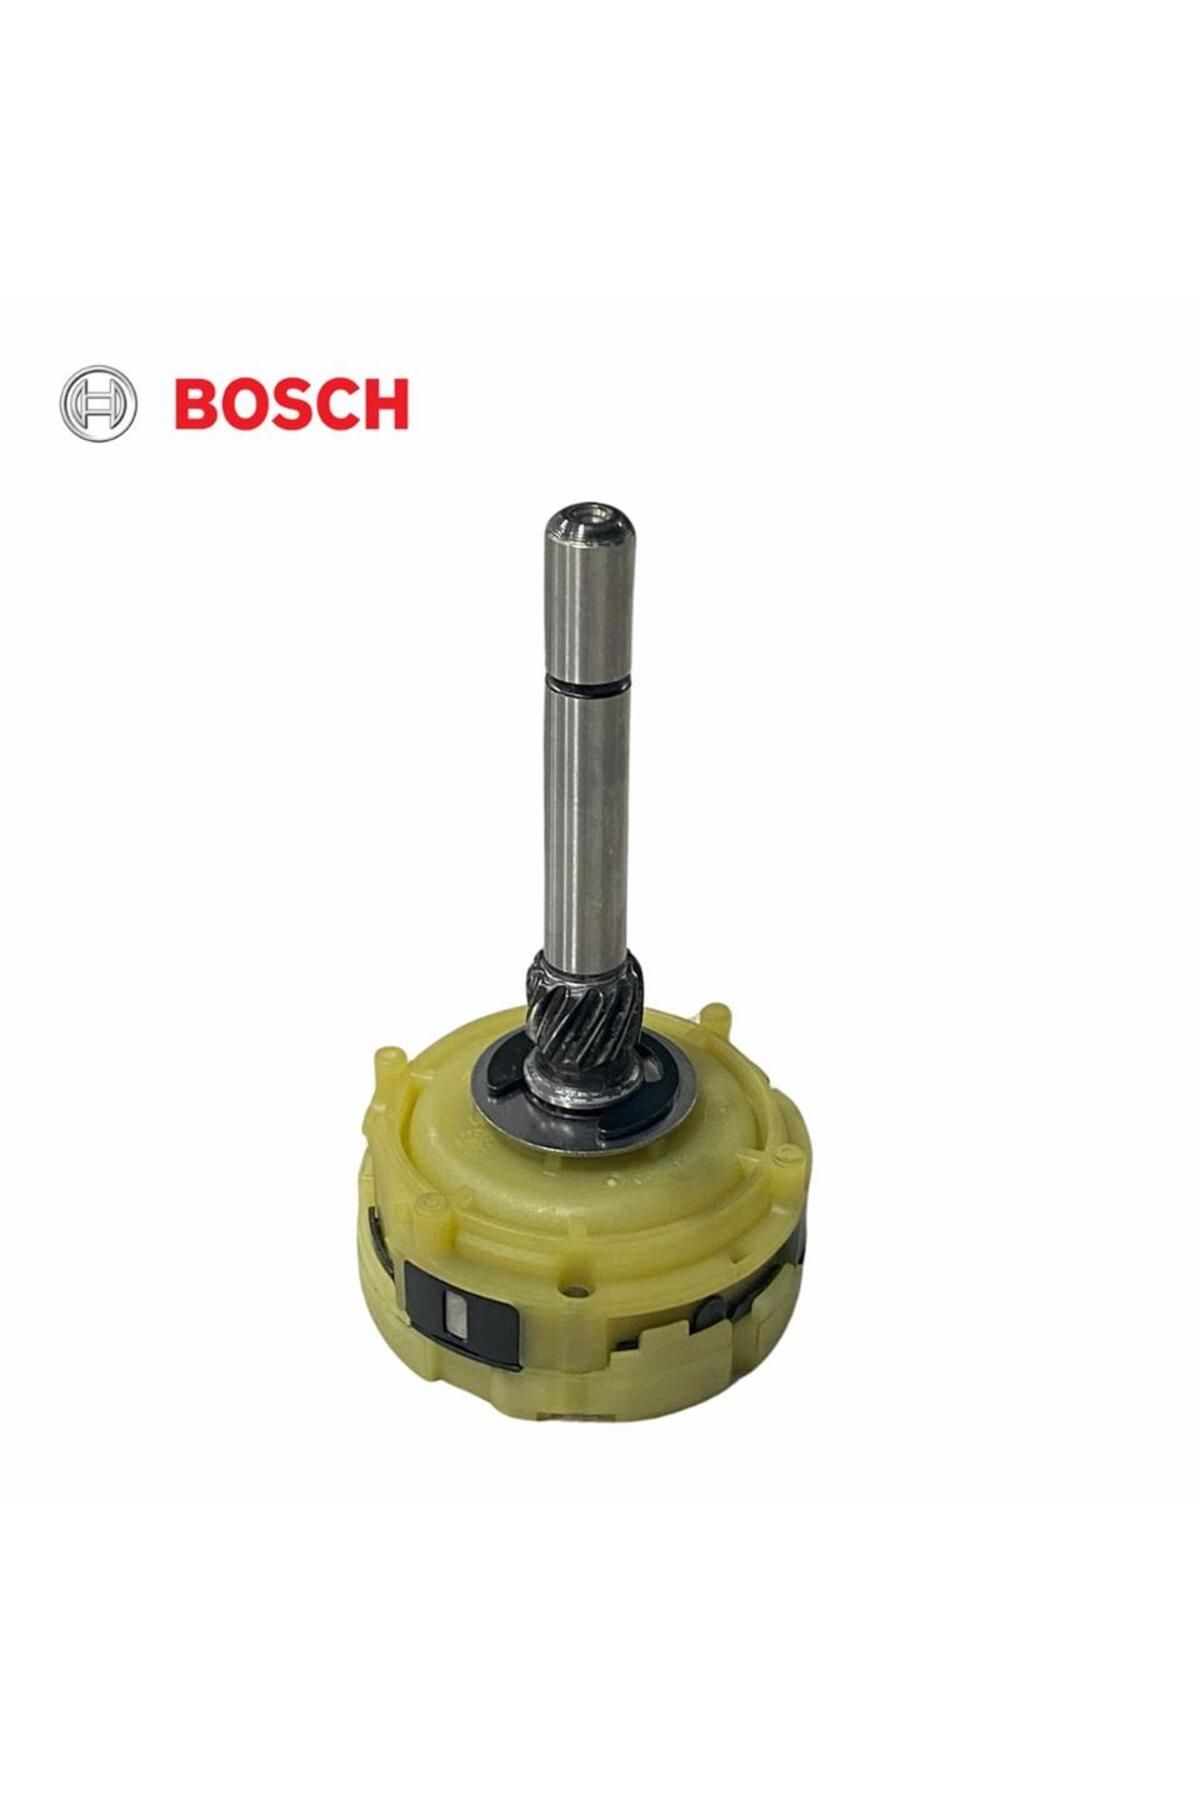 Bosch Marş Redüktör Dişli Mili (PLANET) (DEMİRLİ) (0001108) Uyumlu Renault Clıo/kangoo 1.9 Dizel